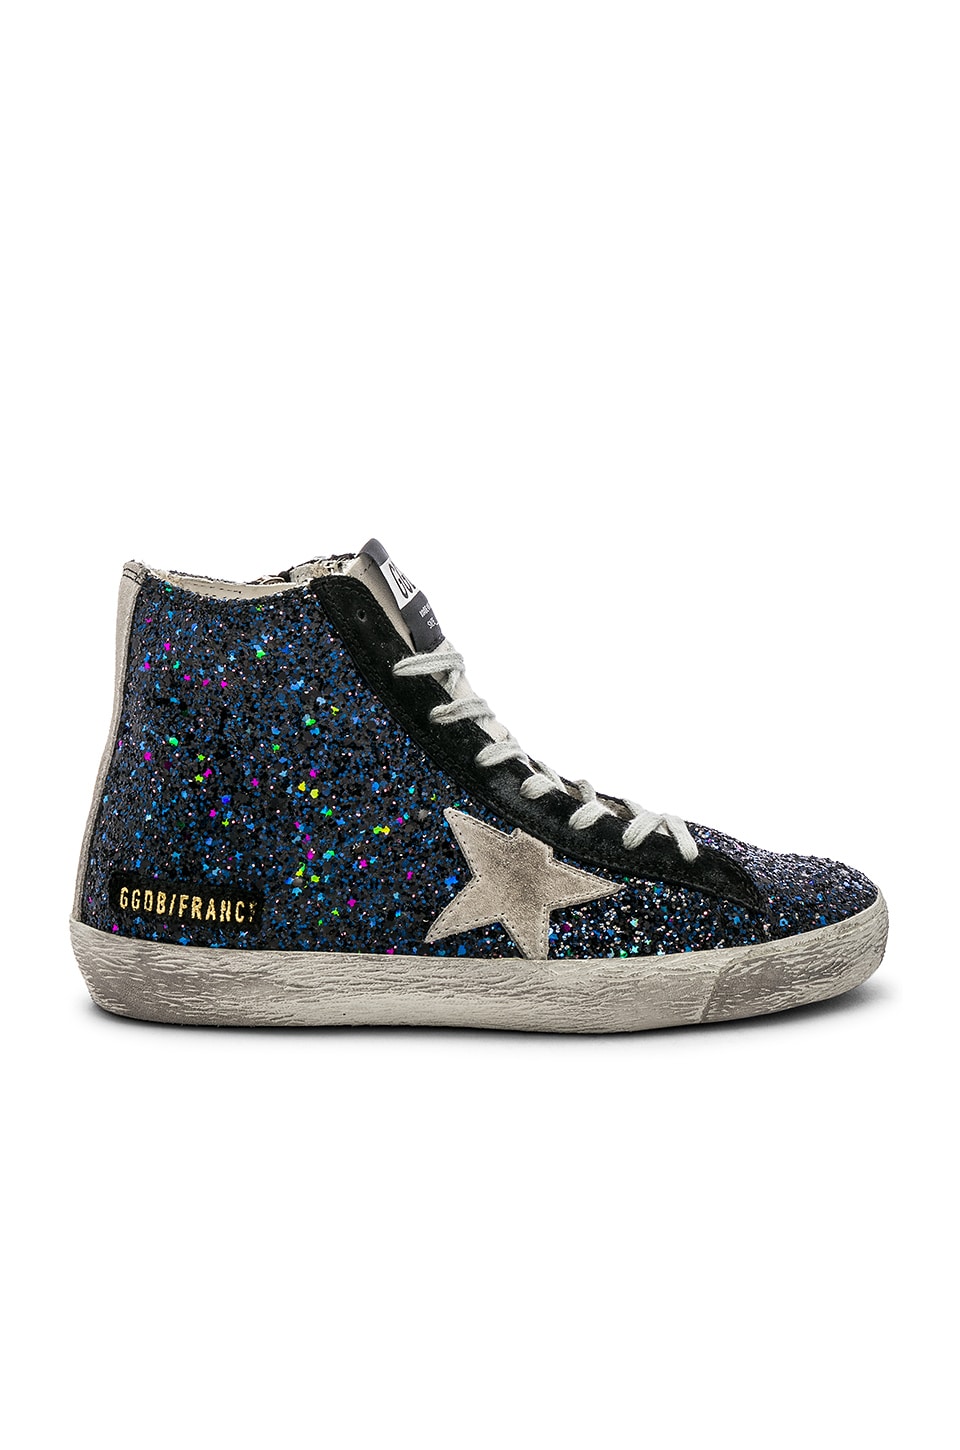 Golden Goose Francy Sneaker in Galaxi Glitter & Ice Star | REVOLVE